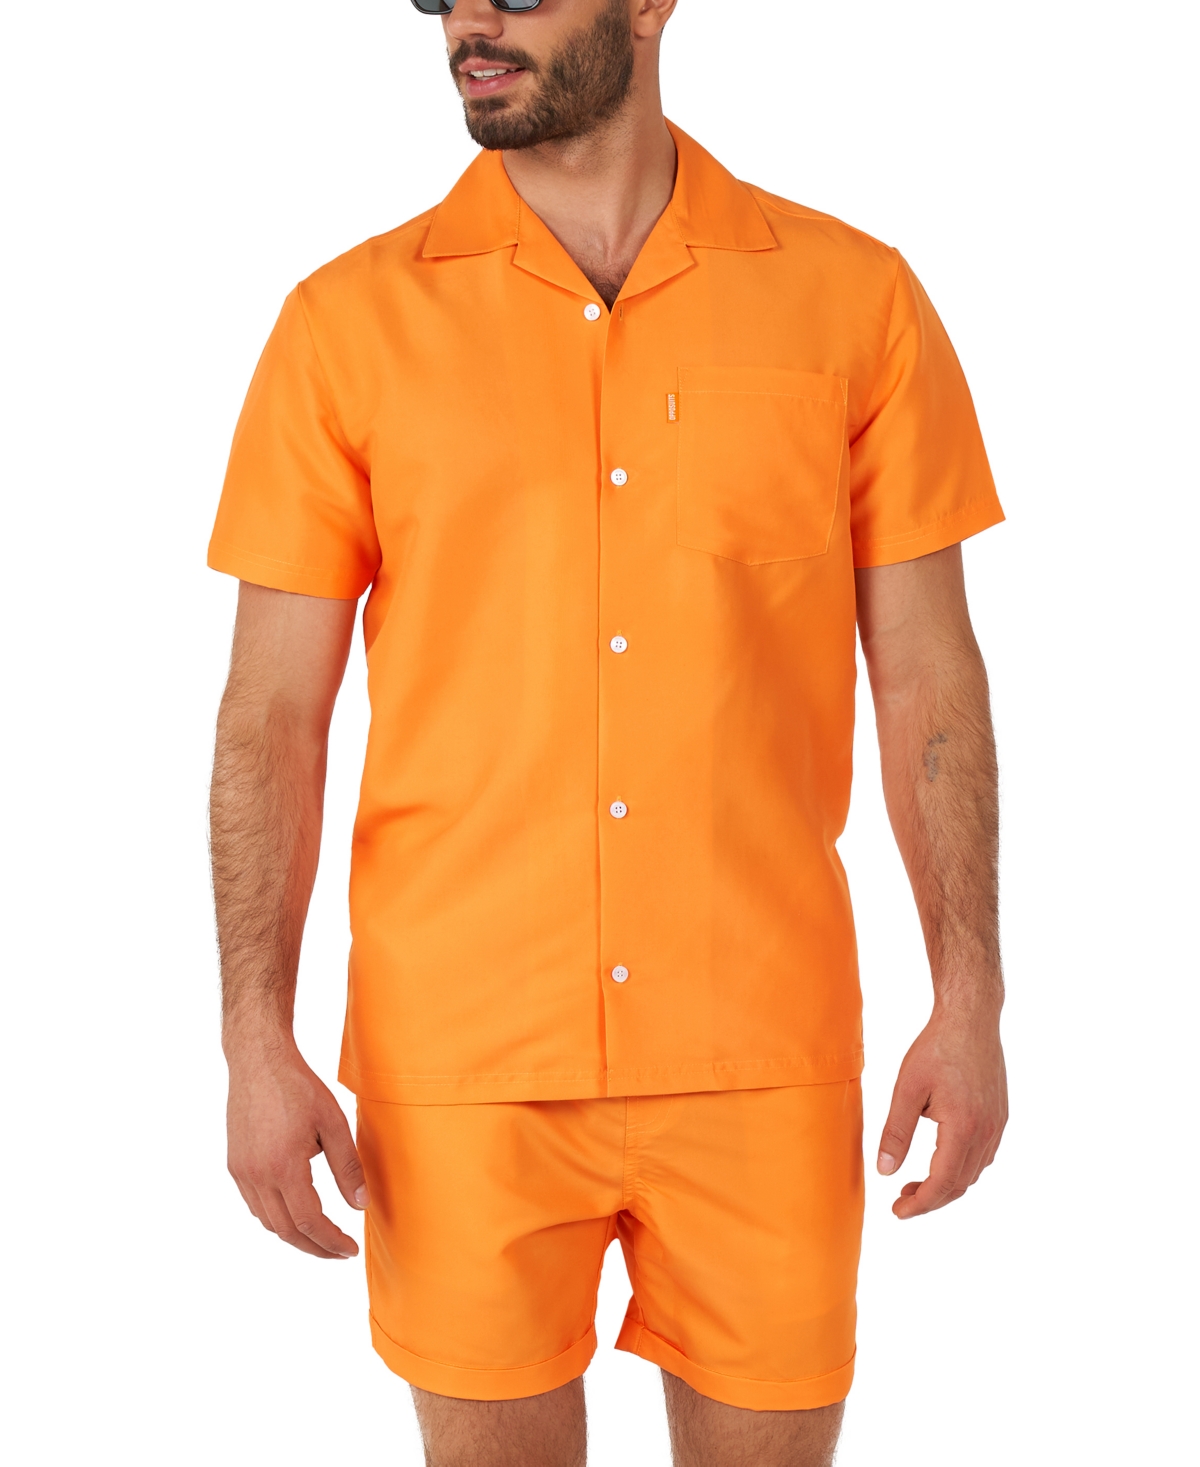 Men's Short-Sleeve Solid Orange Shirt & Shorts Set - Orange